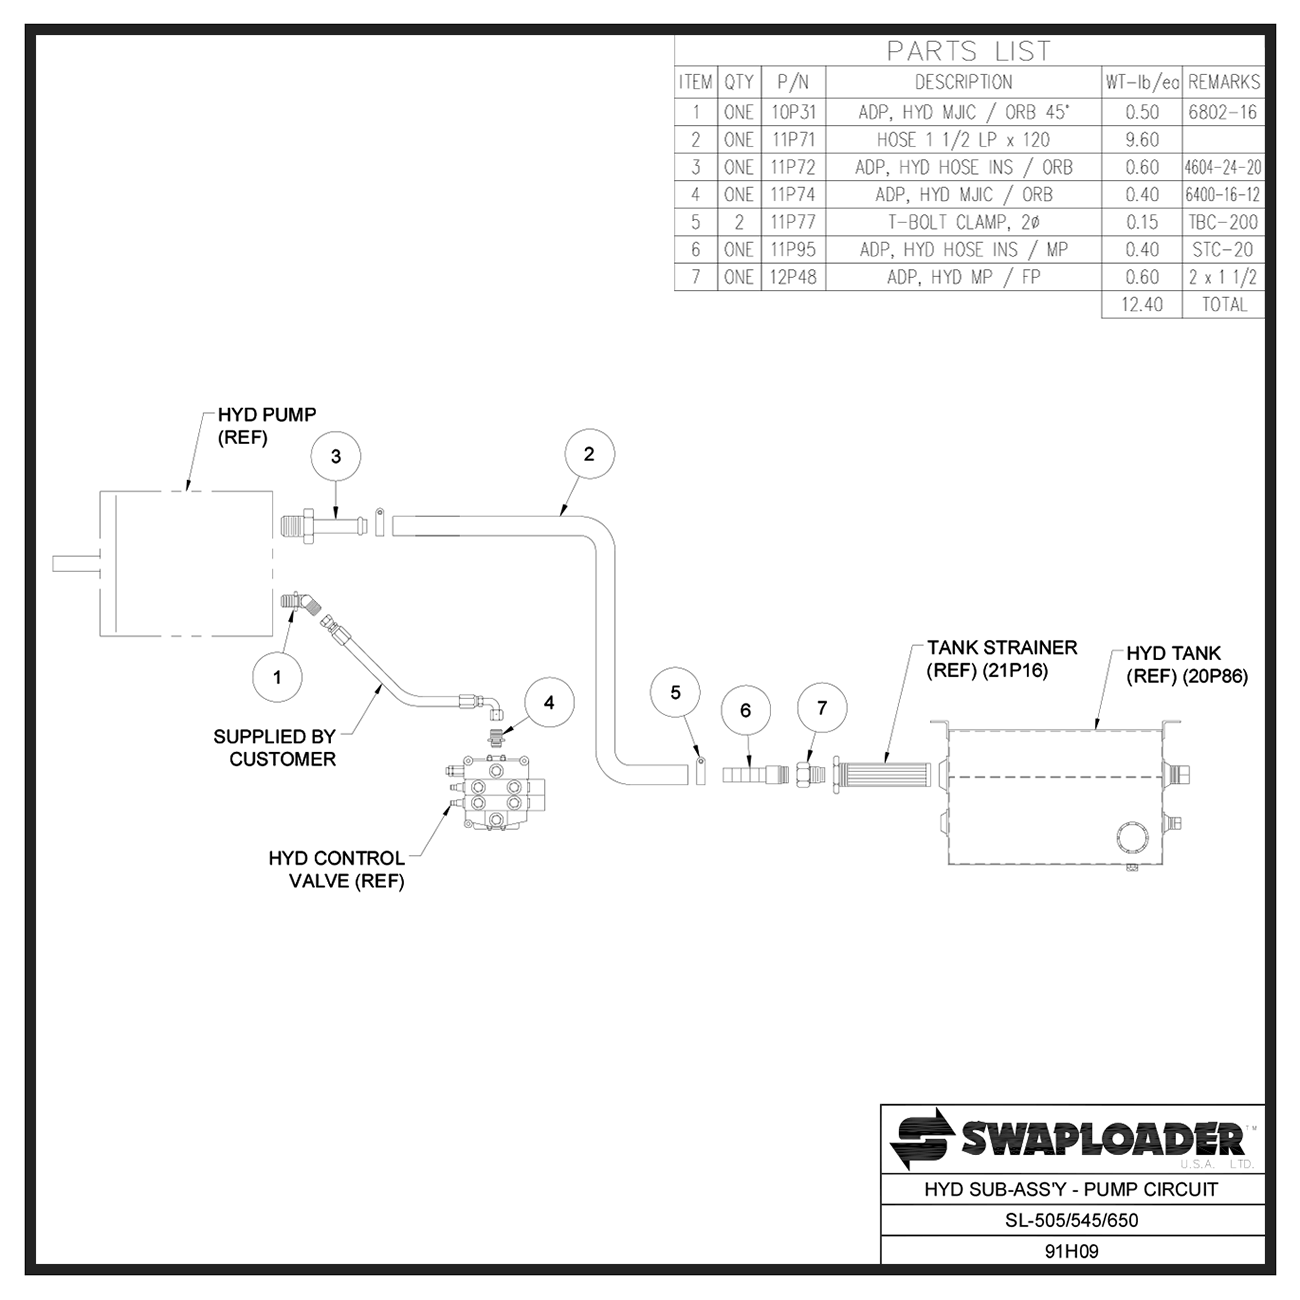 Swaploader Heavy-Duty Hydraulic Sub-Assembly Pump Circuit Diagram